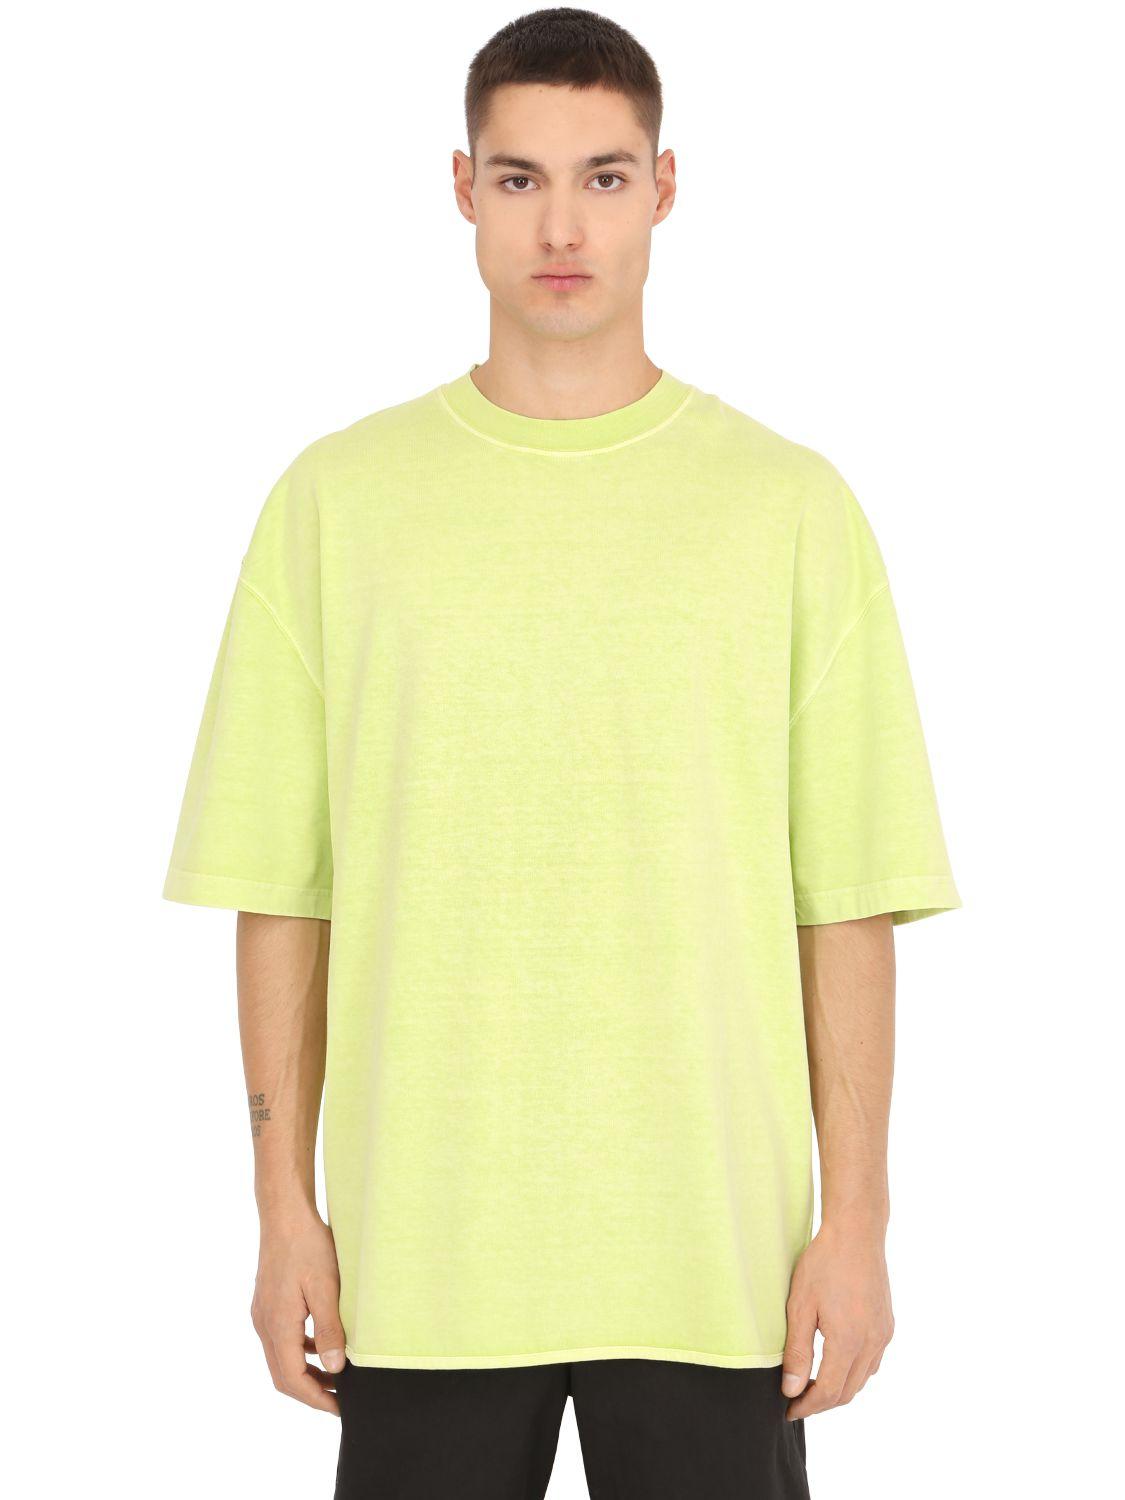 lime green yeezy shirt